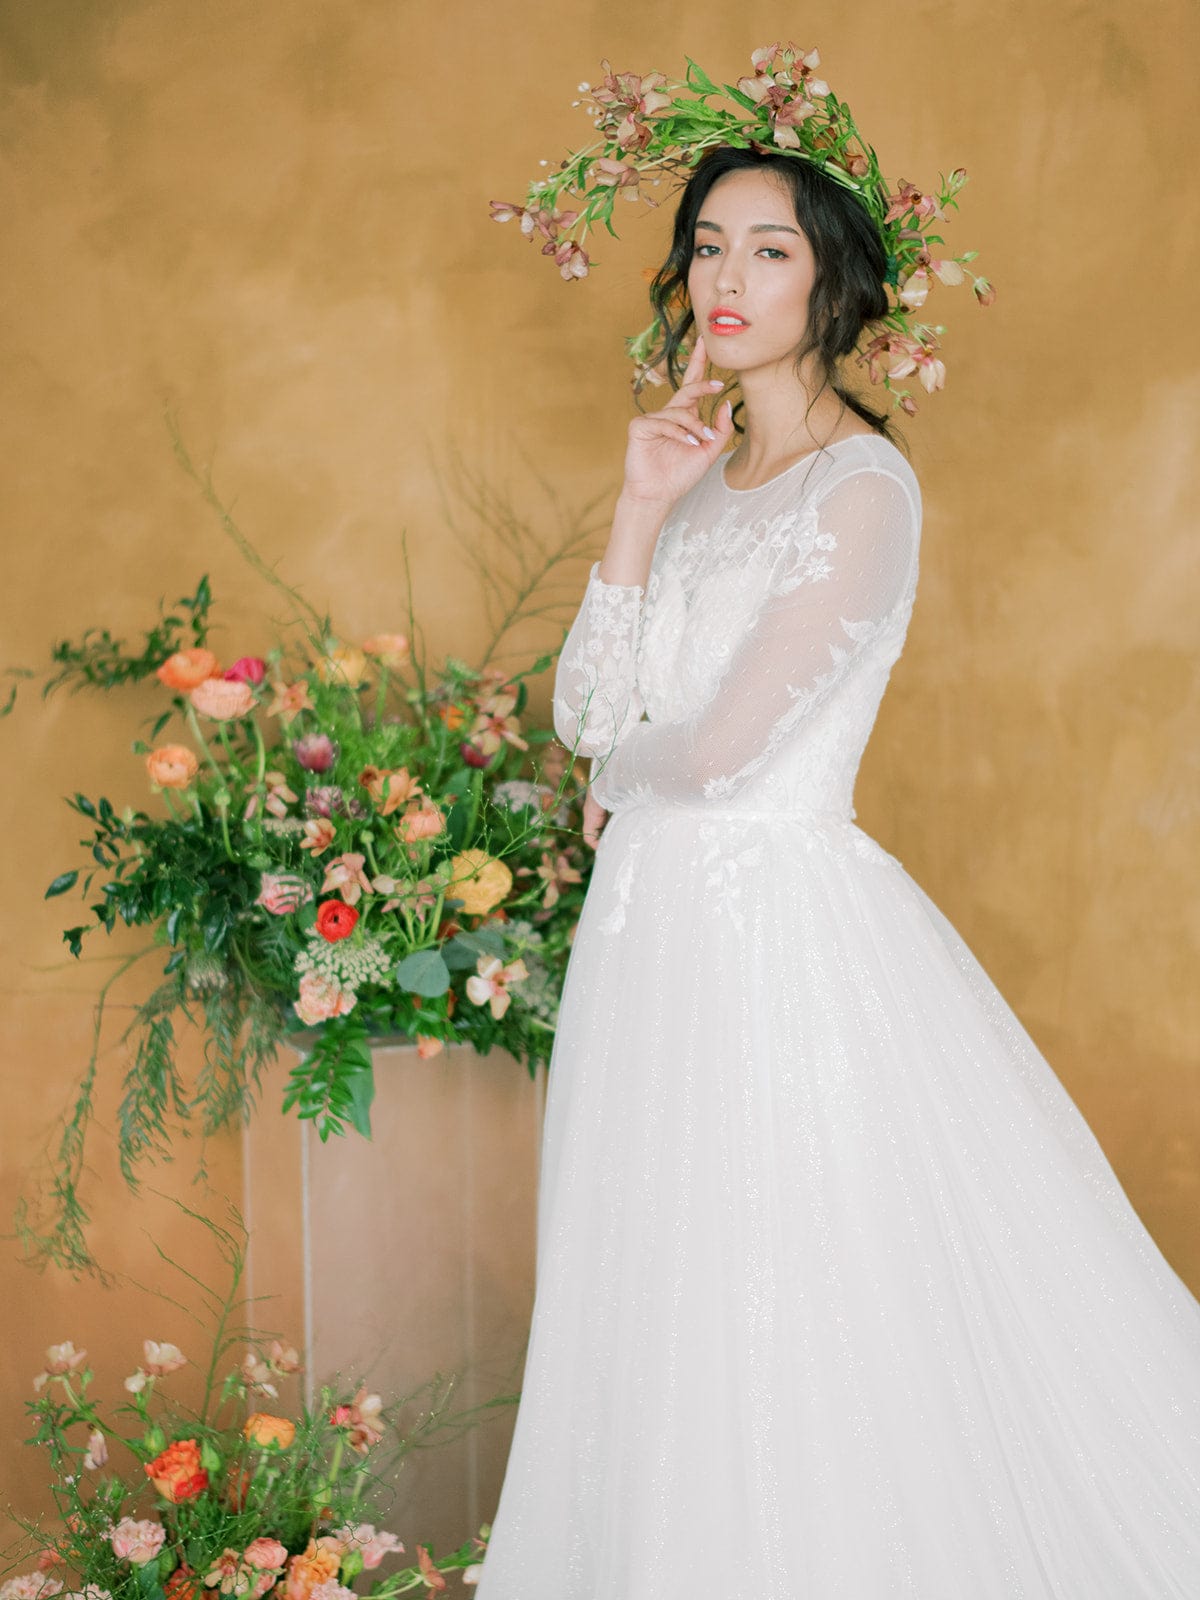 Jinza Bridal Wedding Dress Tulle - Two- Piece Long Sleeves A-Line Wedding Dress, White